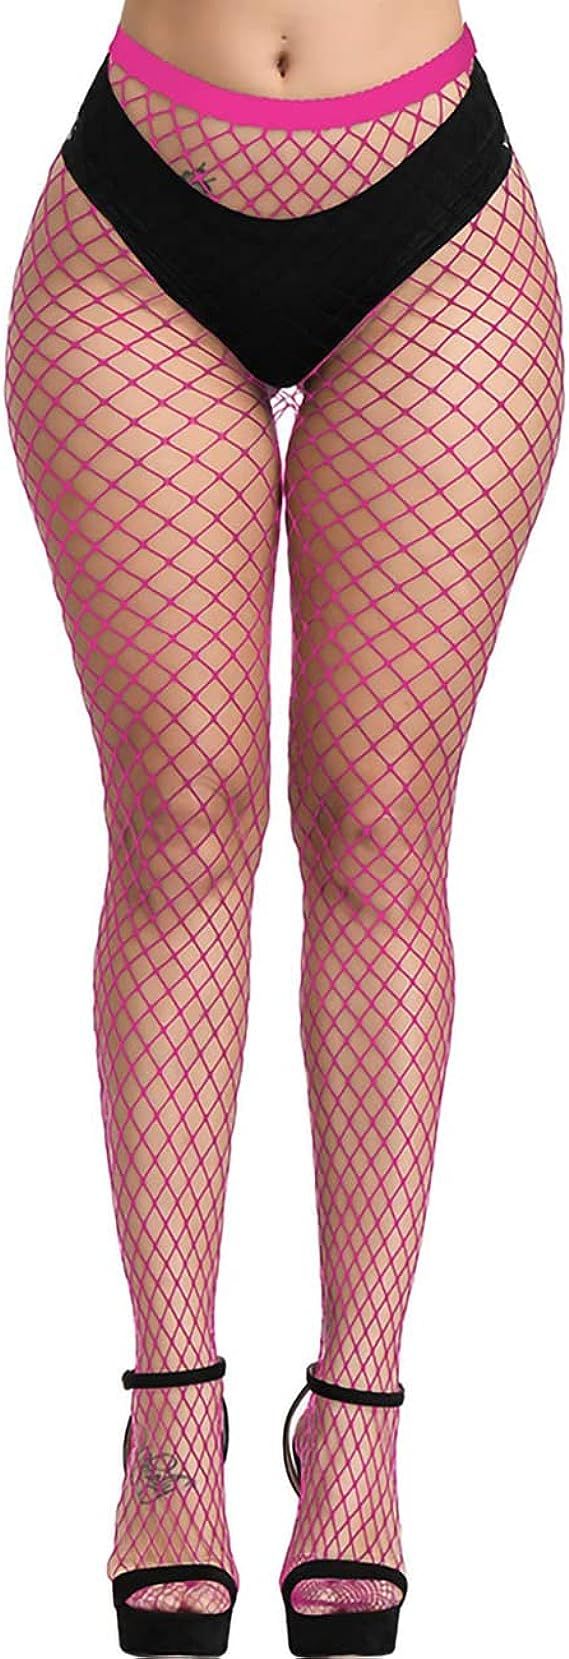 Kikoroco Women's Fishnet Stockings Sexy Tights High Waisted Pantyhose | Amazon (US)